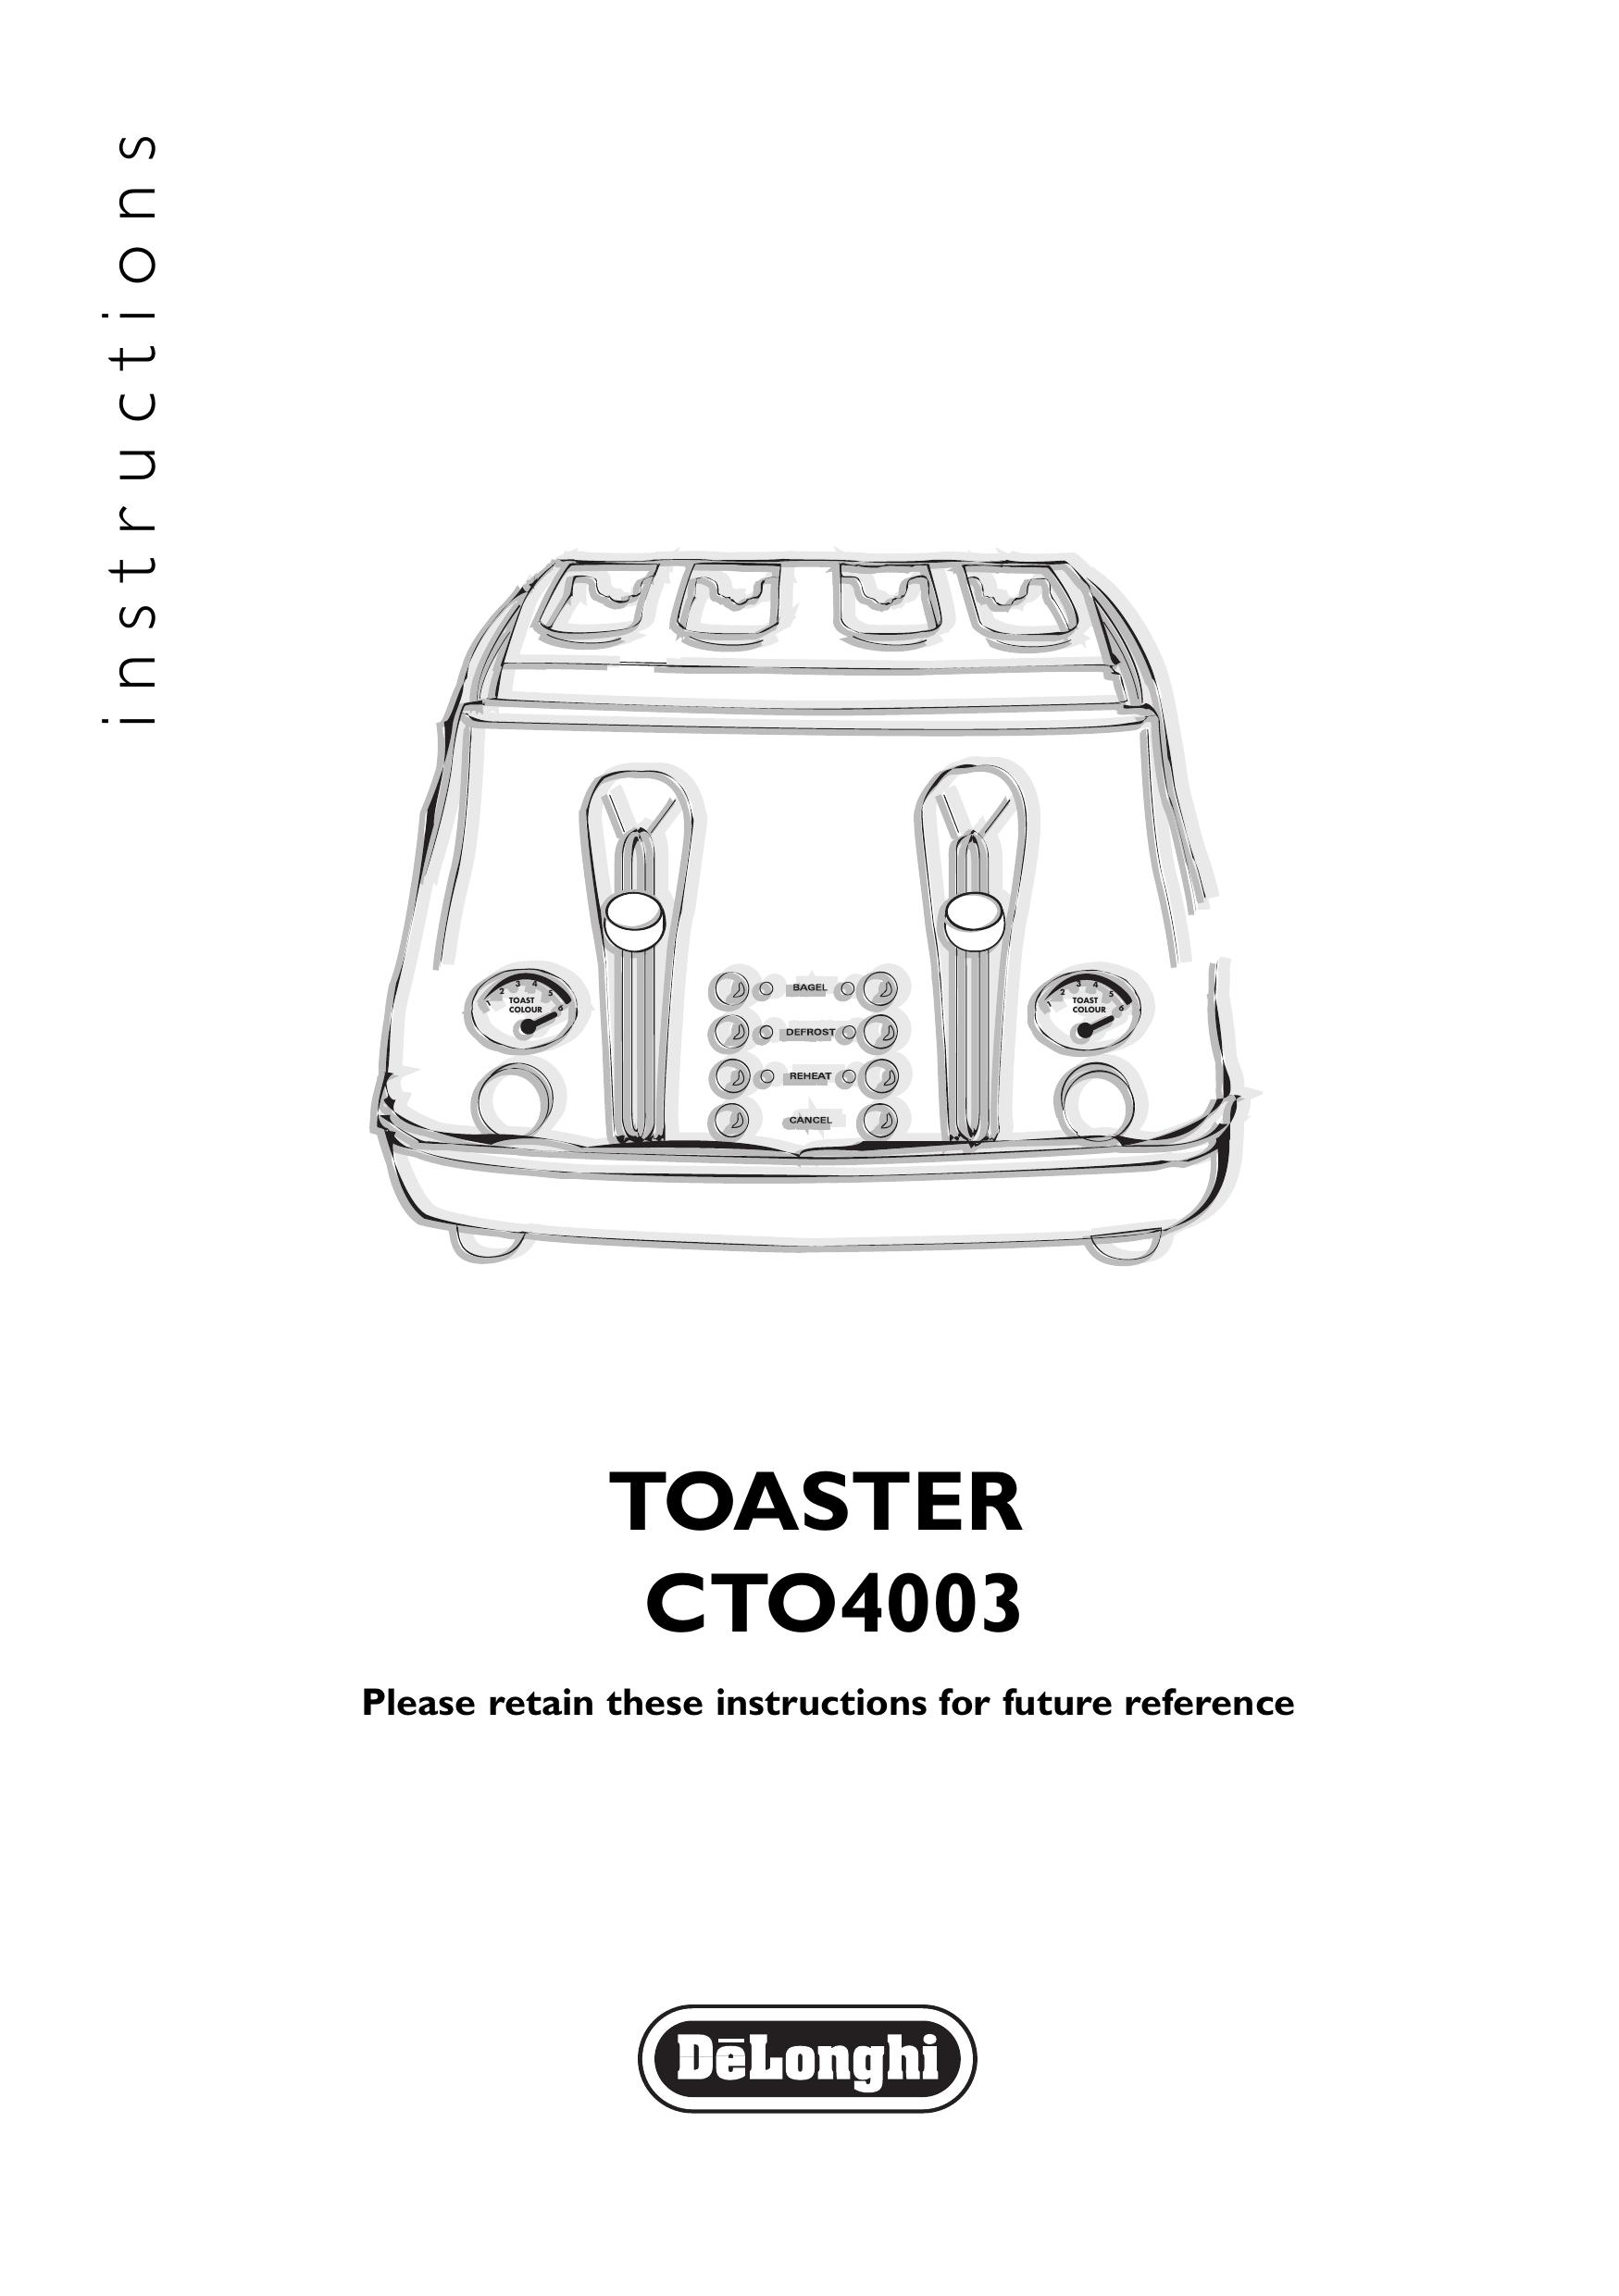 DeLonghi CTO4003 Toaster User Manual